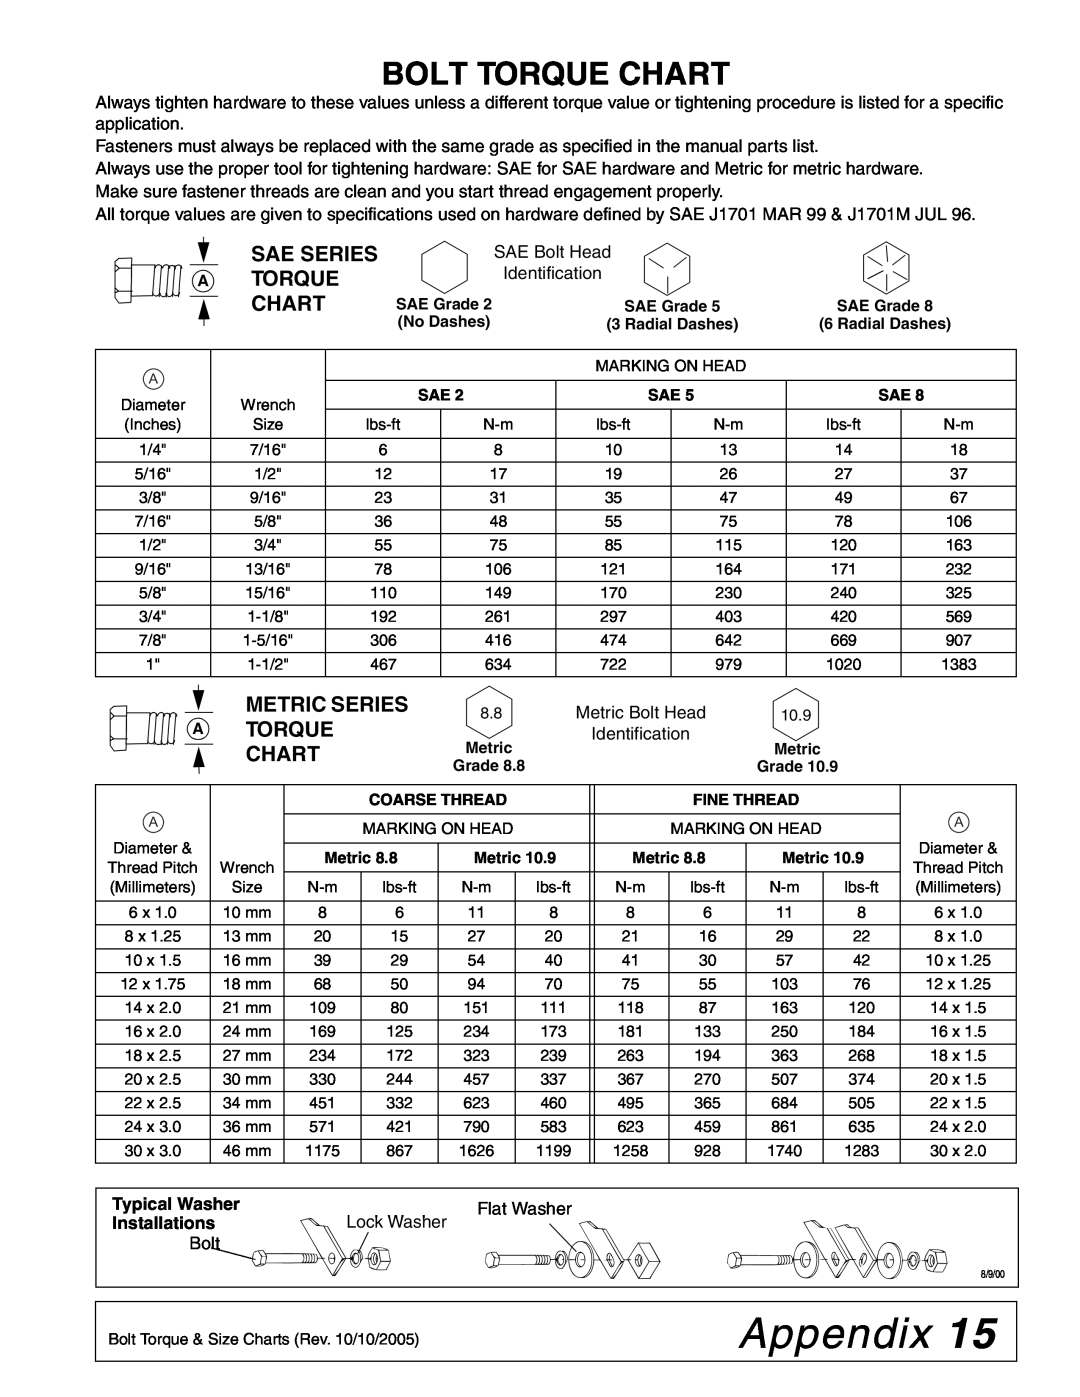 Woods Equipment 211718 installation manual Appendix, Bolt Torque Chart, Sae Series A Torque Chart, Metric Series 